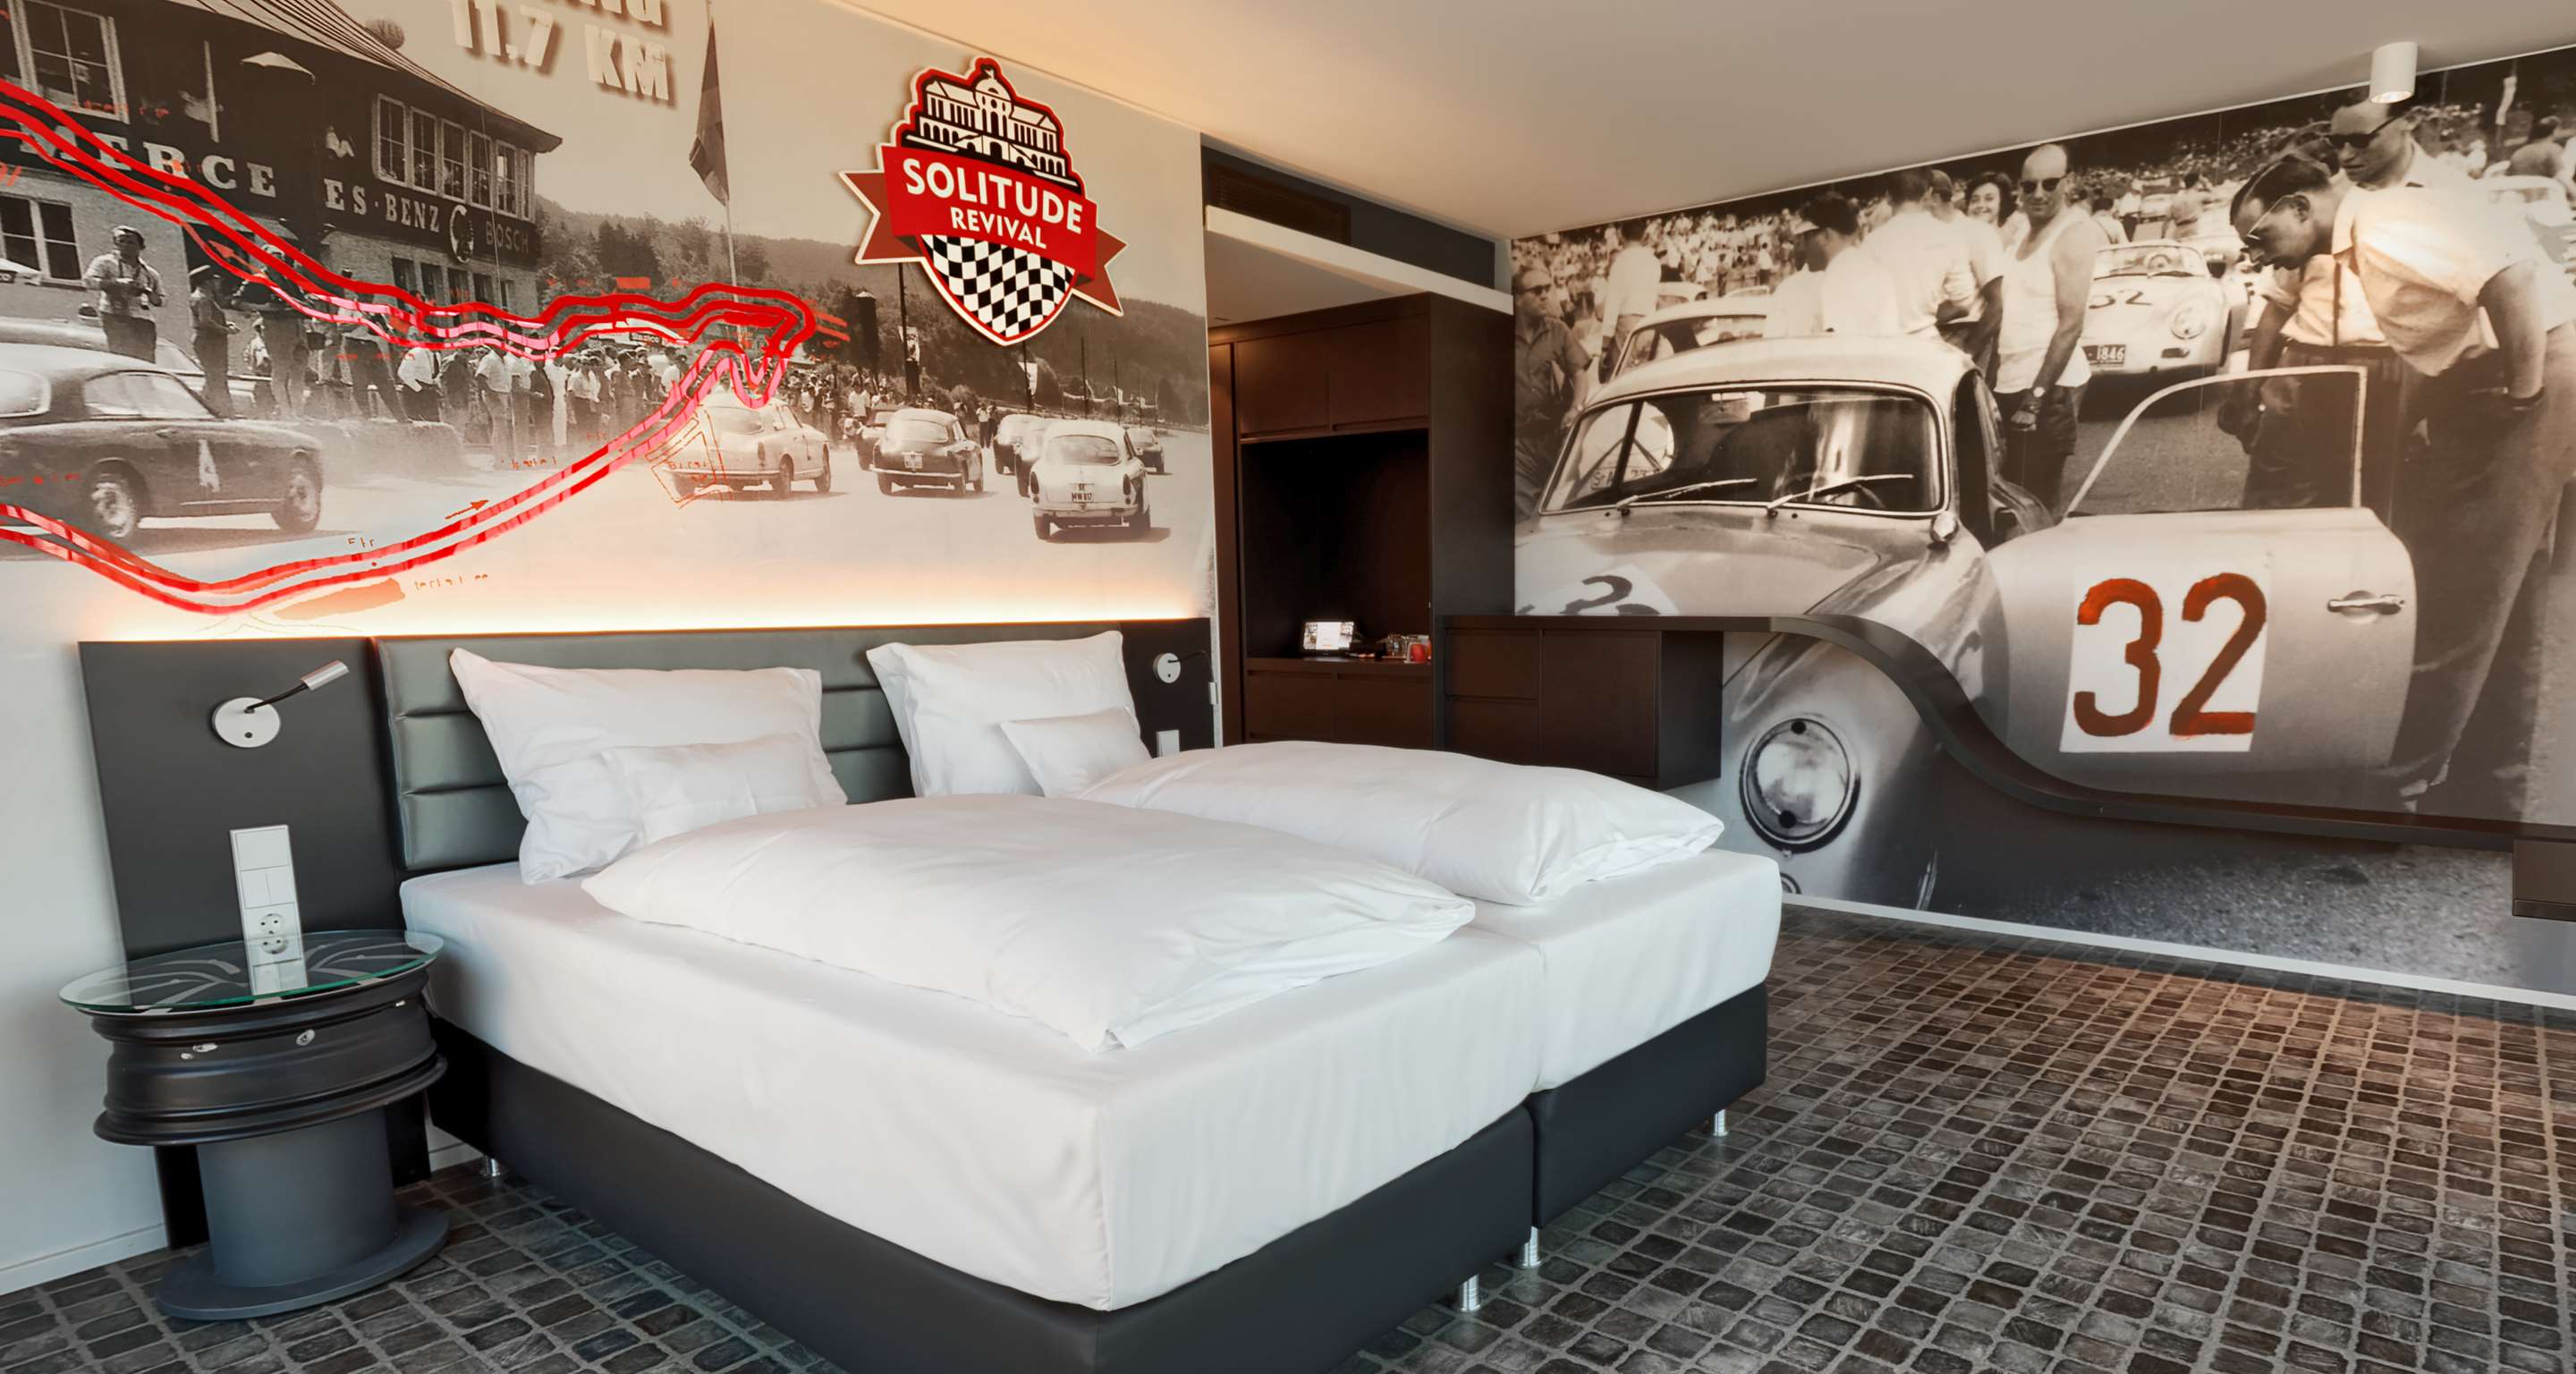 Bilder V8 Hotel Motorworld Region Stuttgart, BW Premier Collection